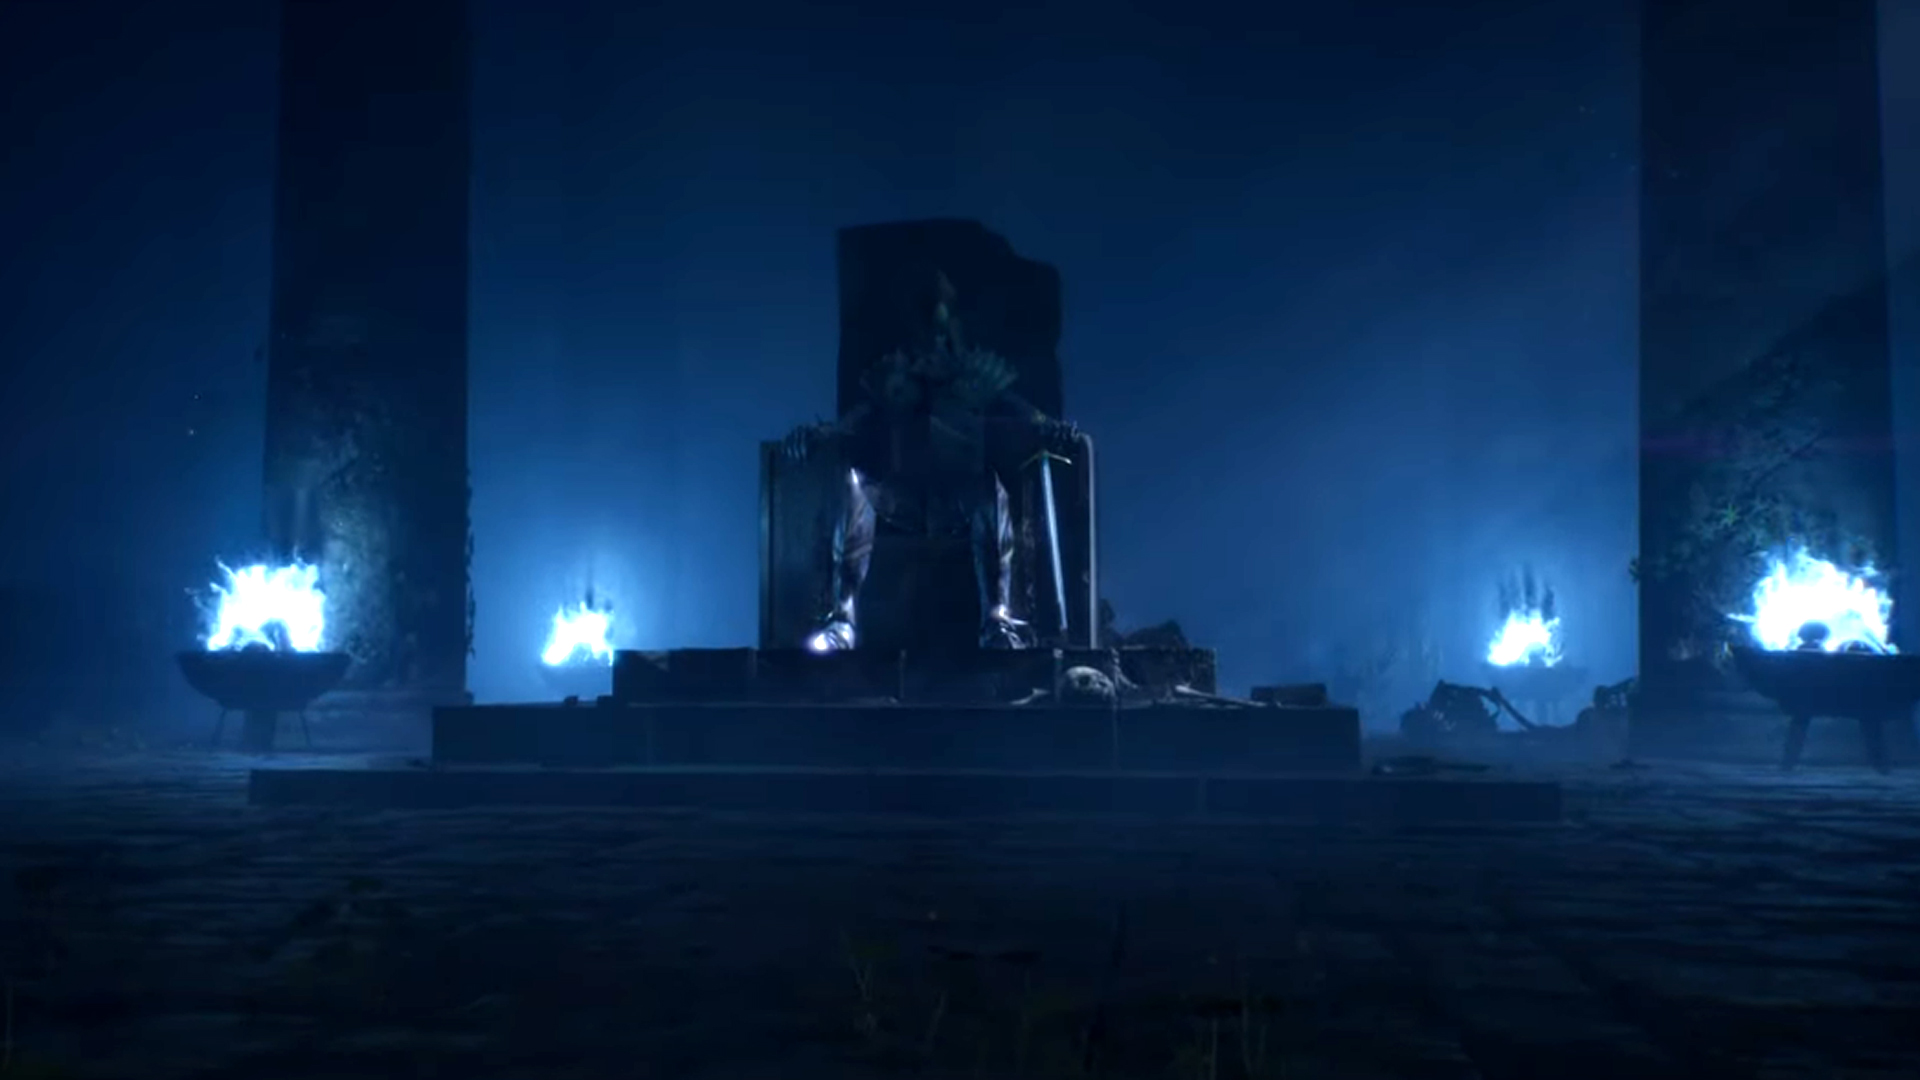 Former Elder Scrolls devs' RPG The Wayward Realms gets a spooky, Skyrim-like trailer